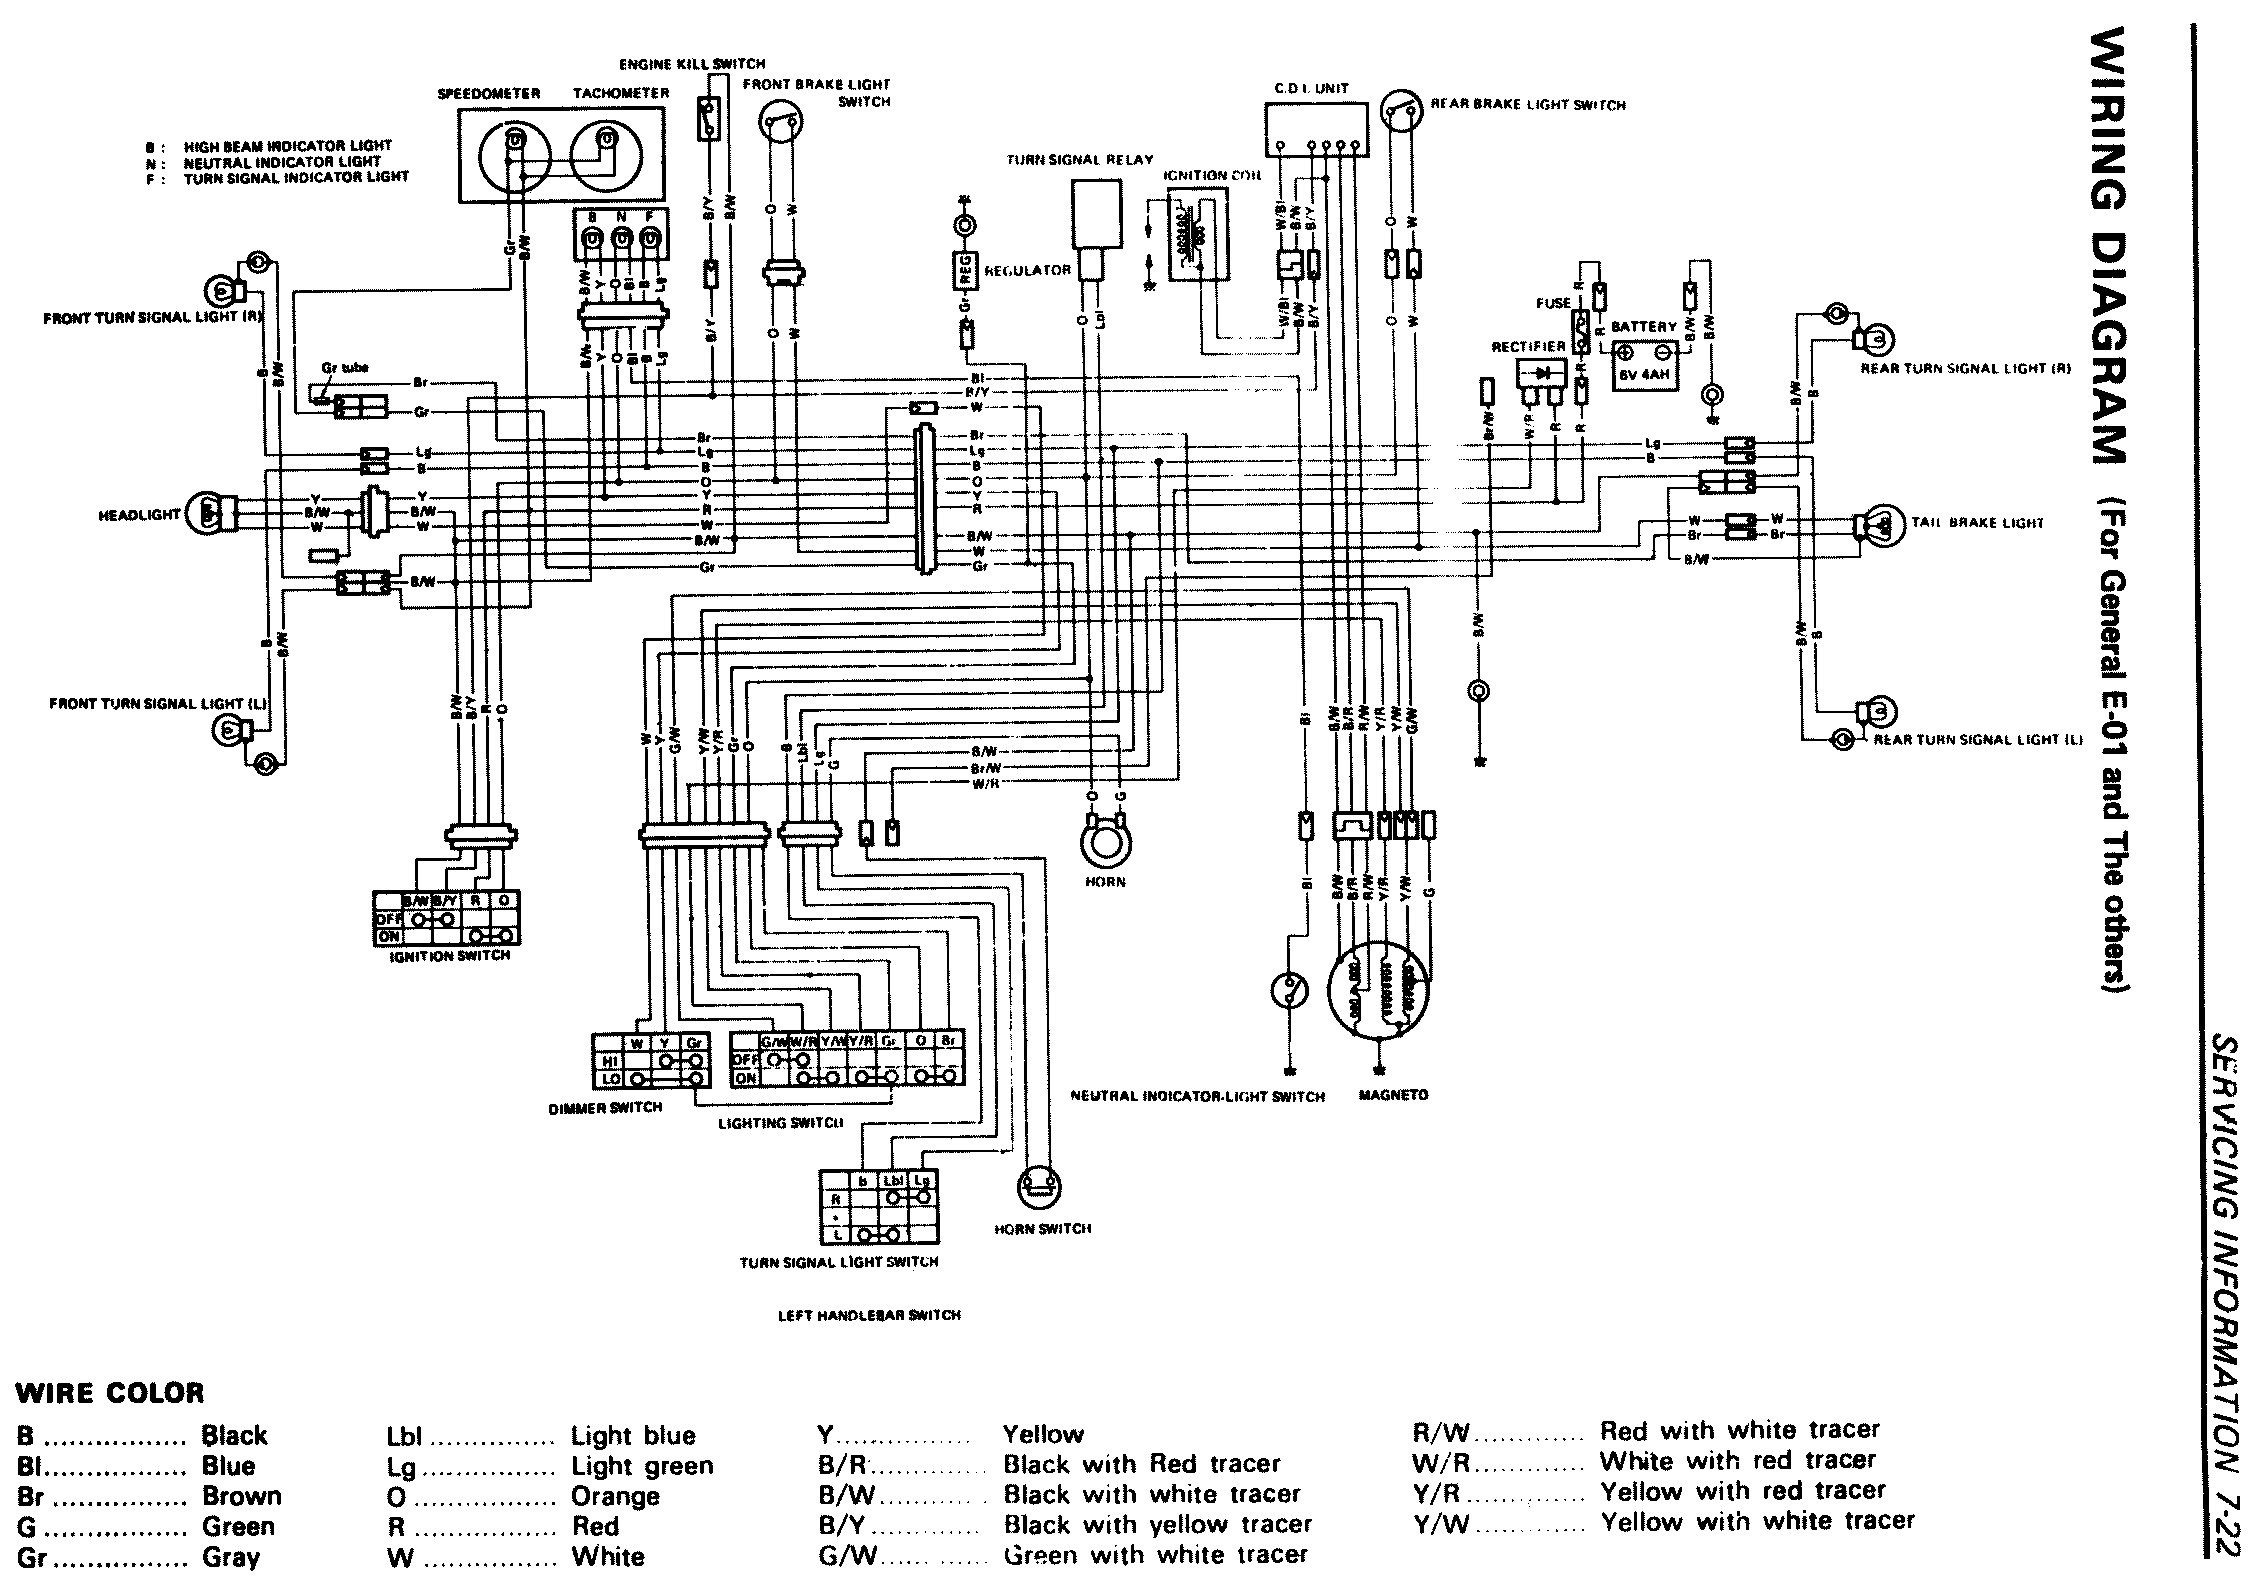 Suzuki Rv 125 Wiring Diagram from detoxicrecenze.com